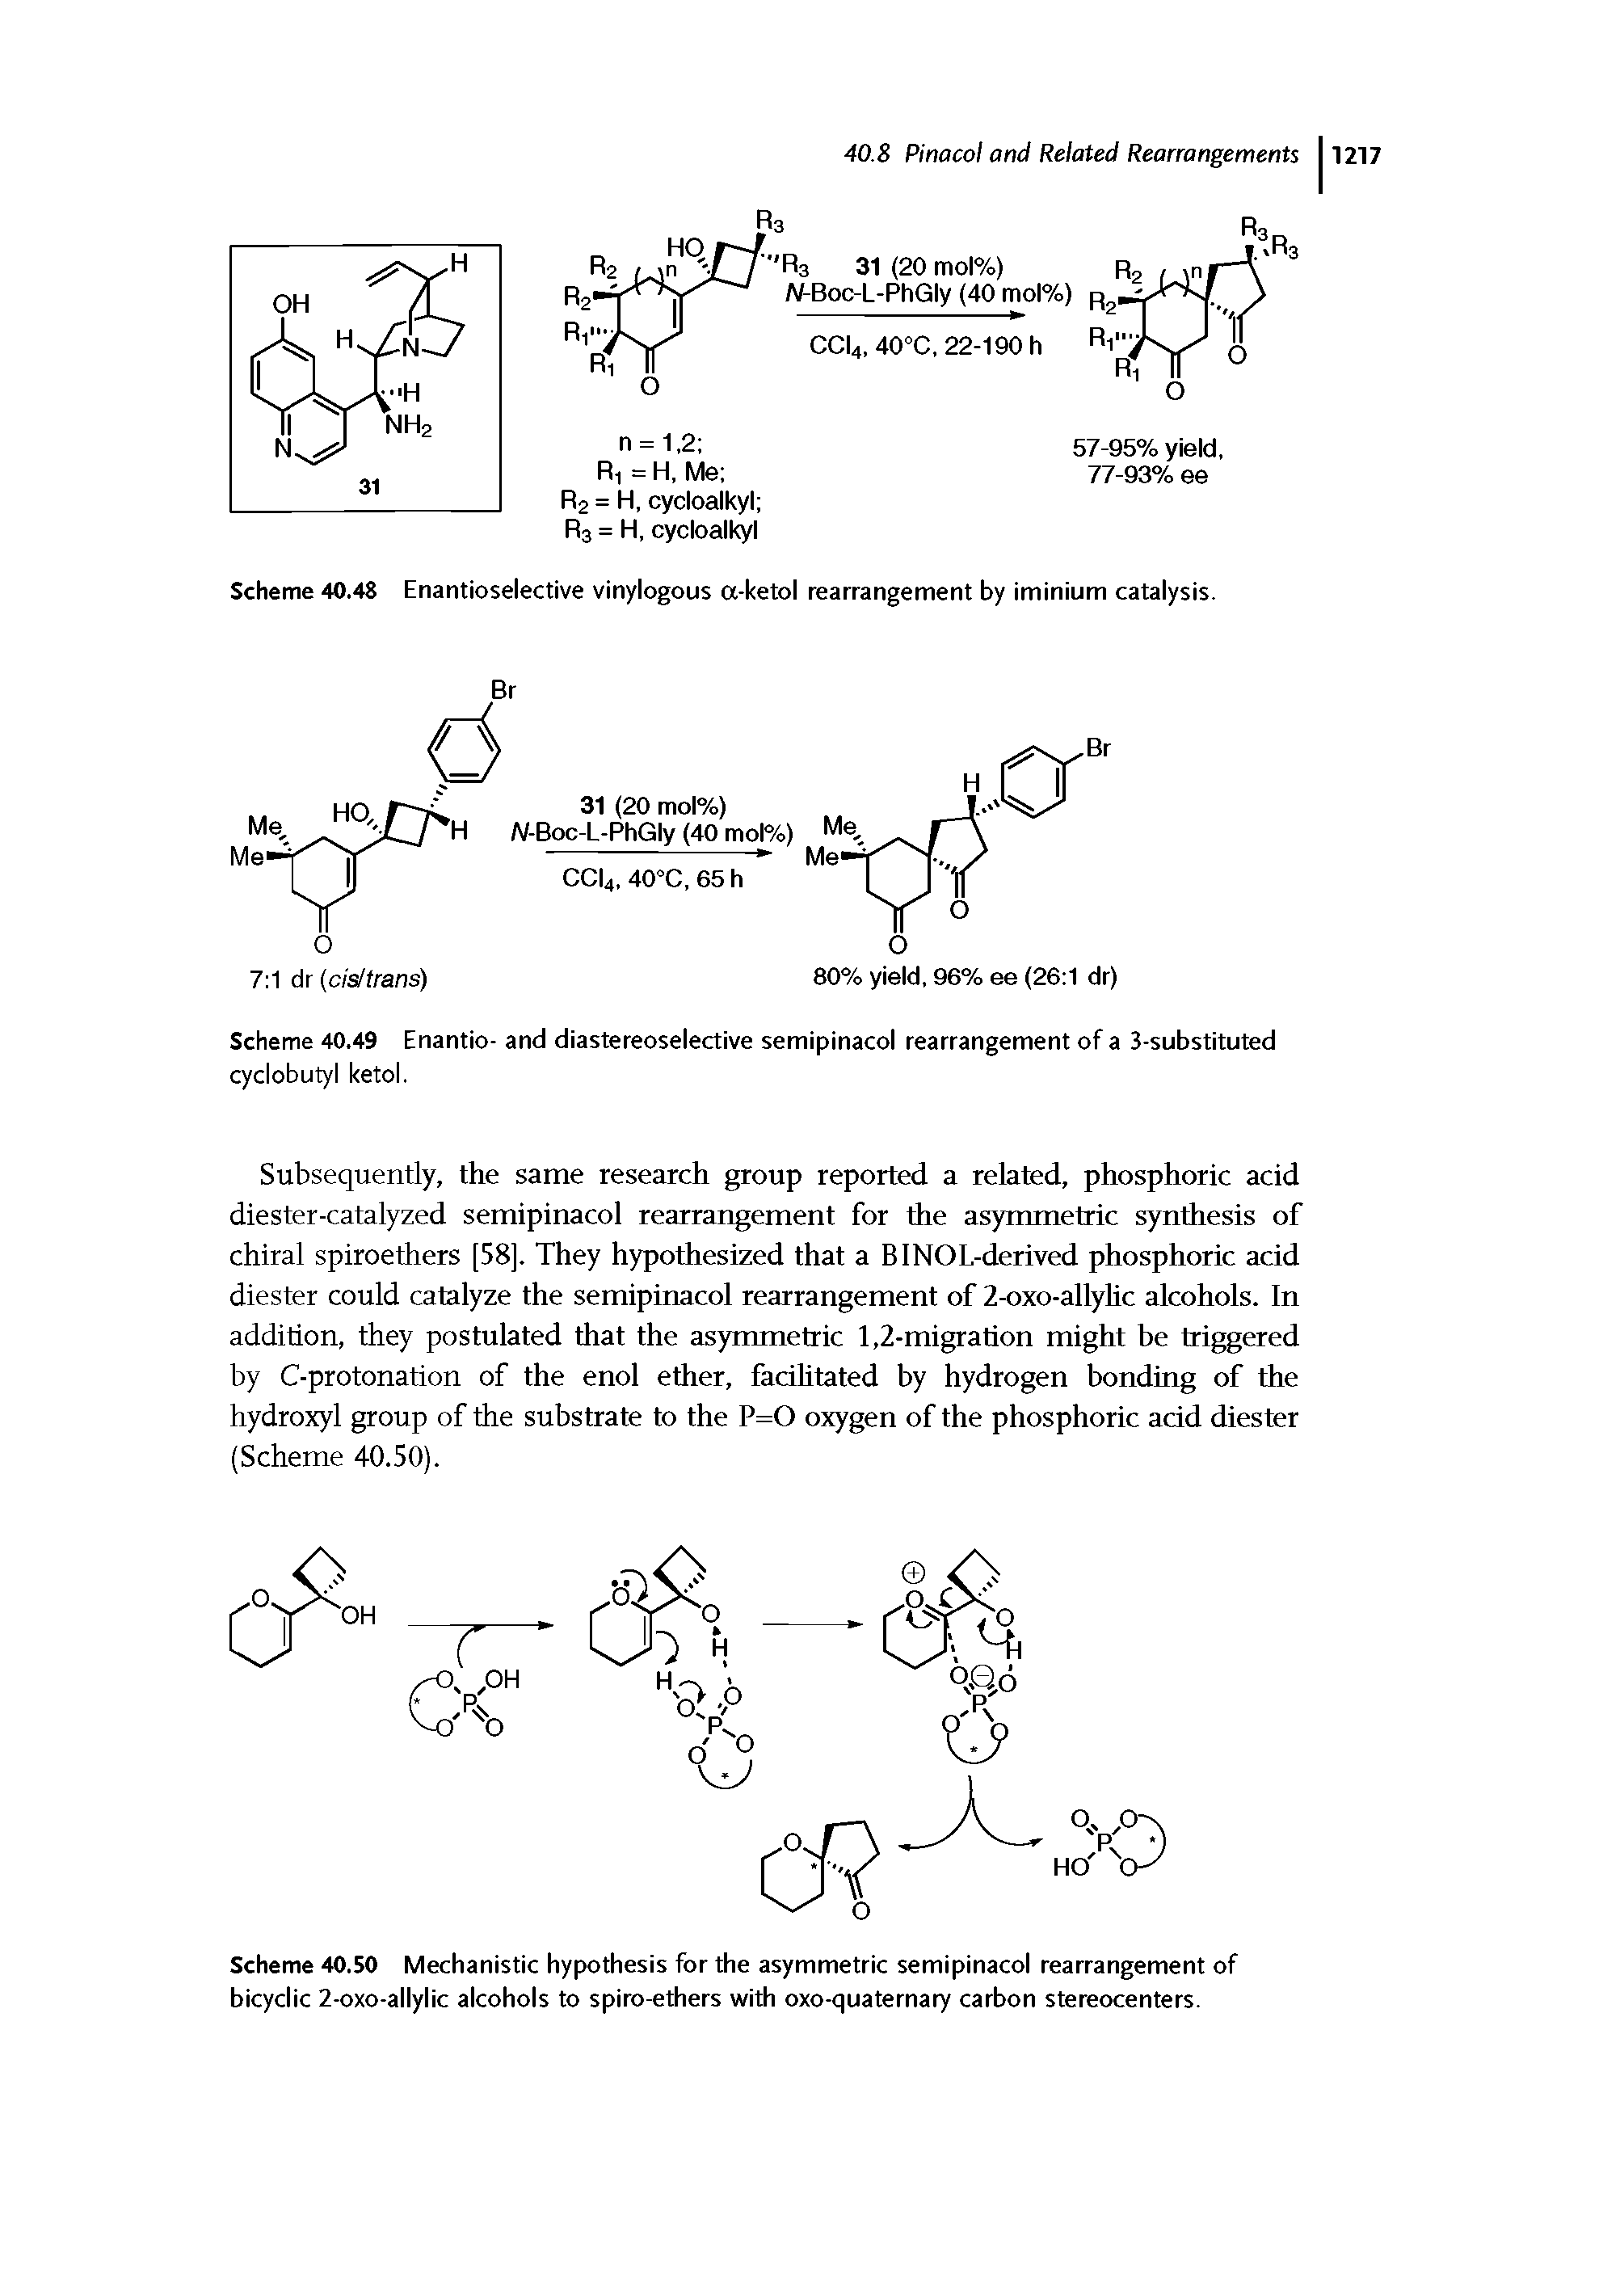 Scheme 40.49 Enantio- and diastereoselective semipinacol rearrangement of a 3-substituted cyclobutyl ketol.